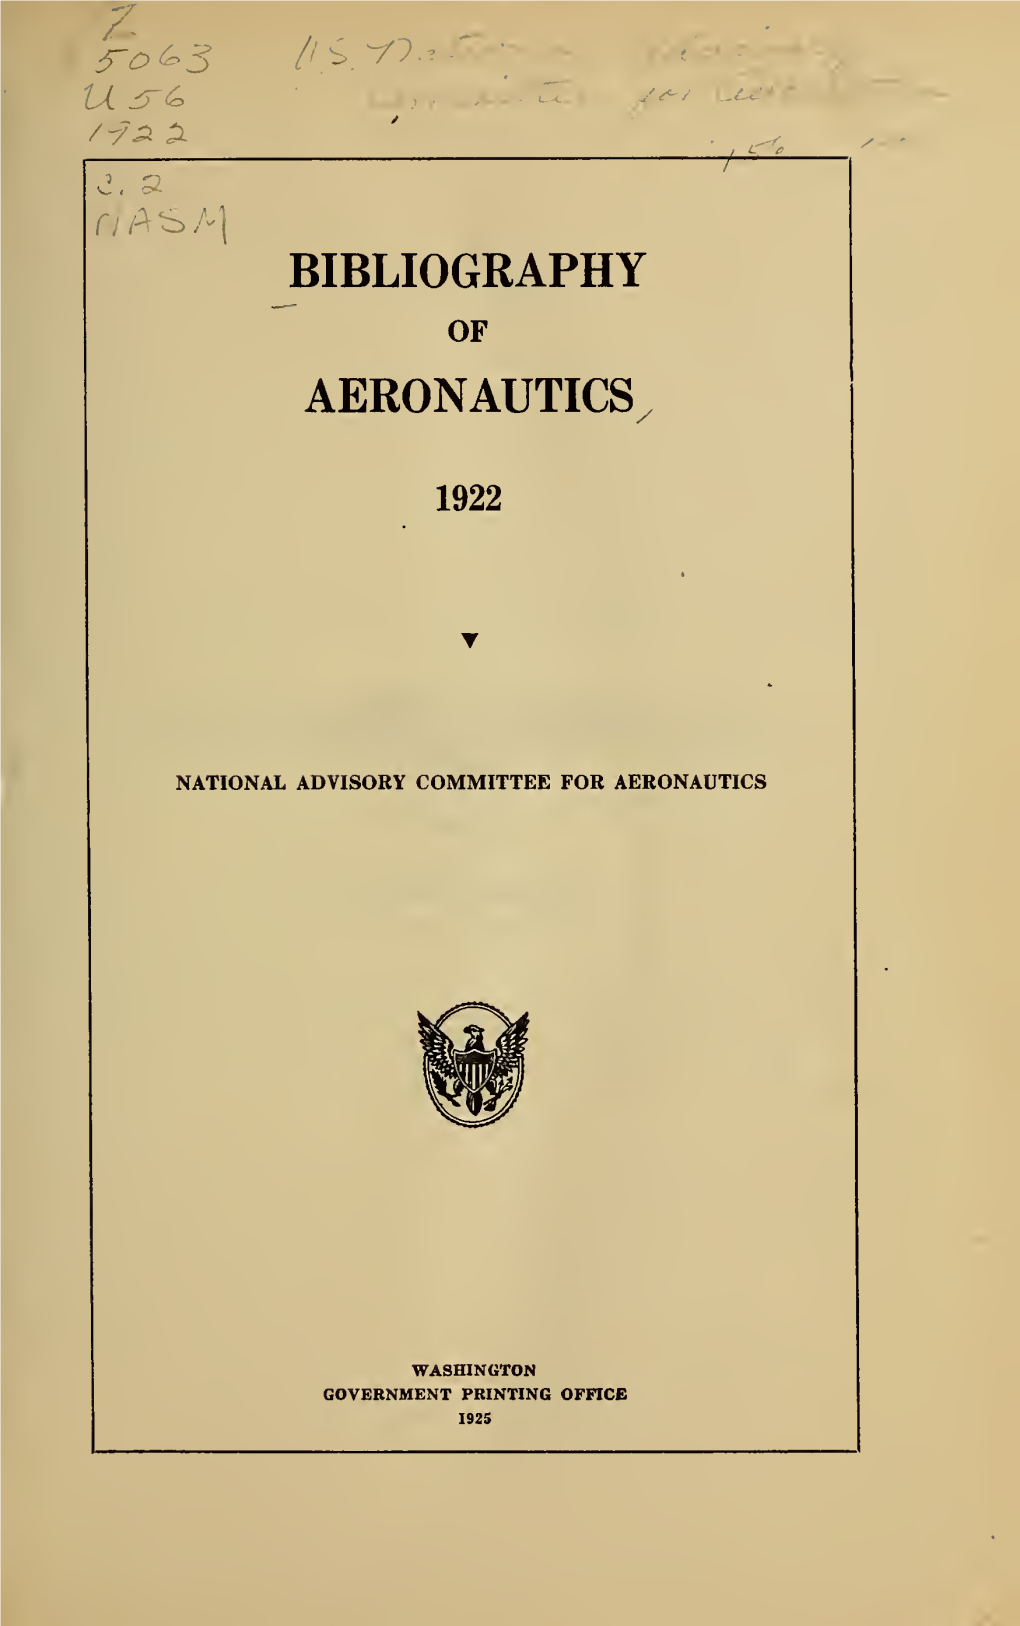 Bibliography of Aeronautics 1922